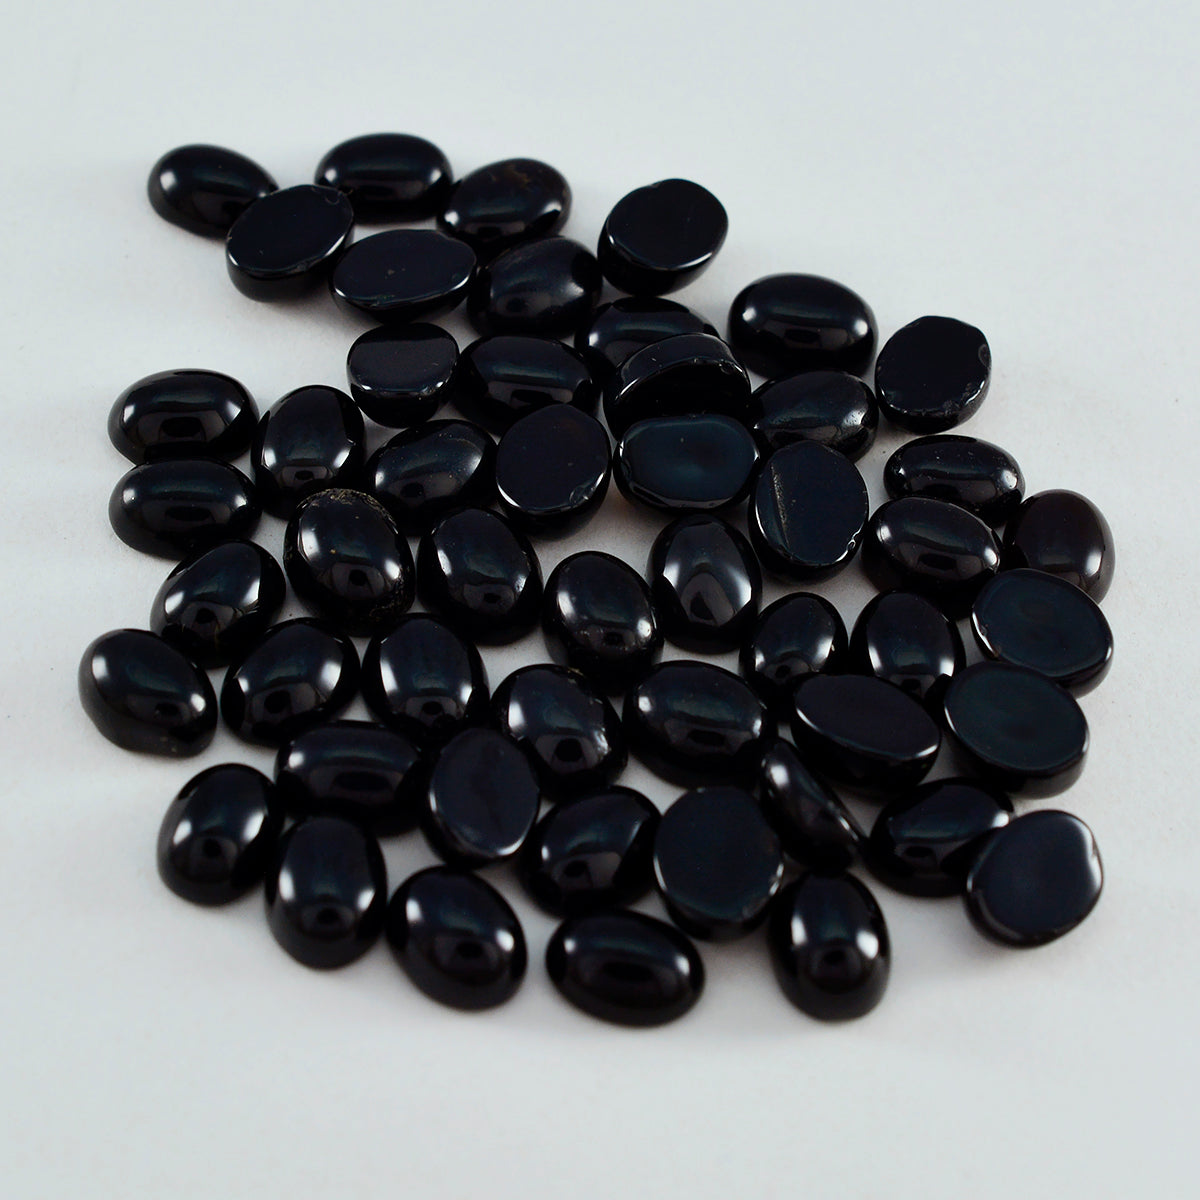 riyogems 1st svart onyx cabochon 3x5 mm oval form snygg kvalitetspärla